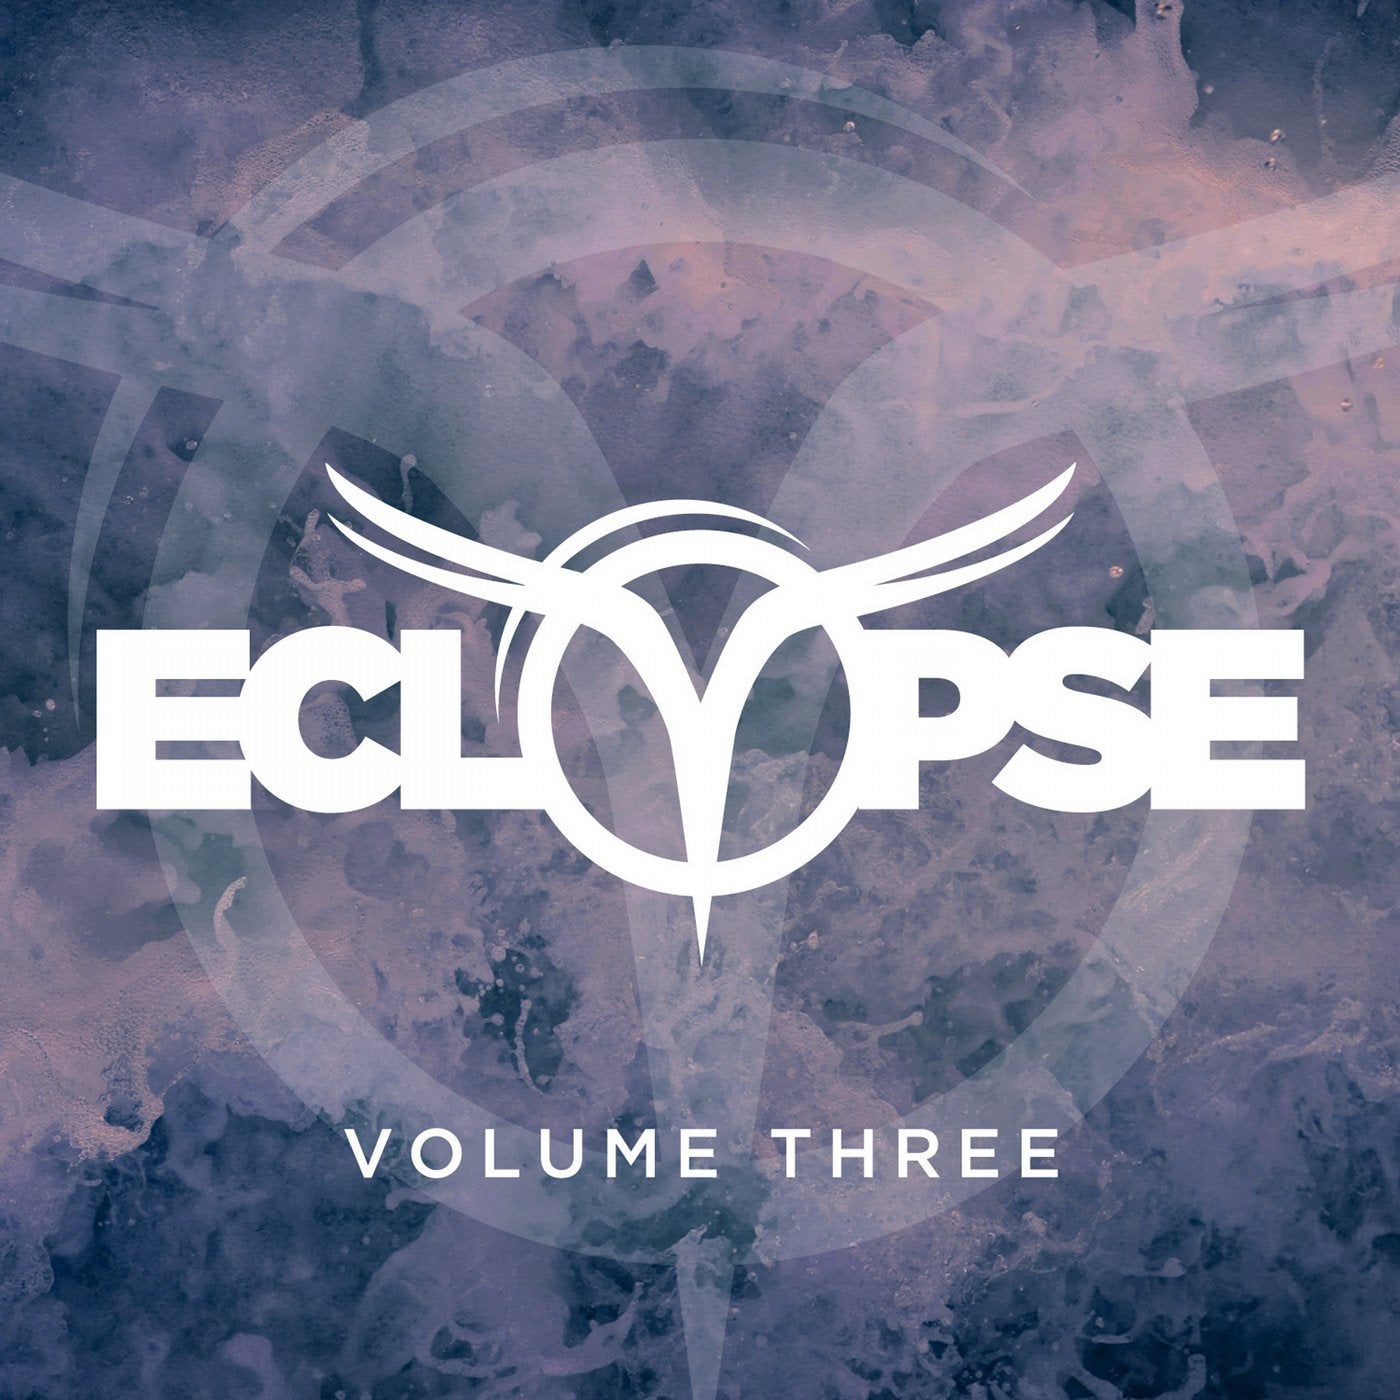 Eclypse Volume Three